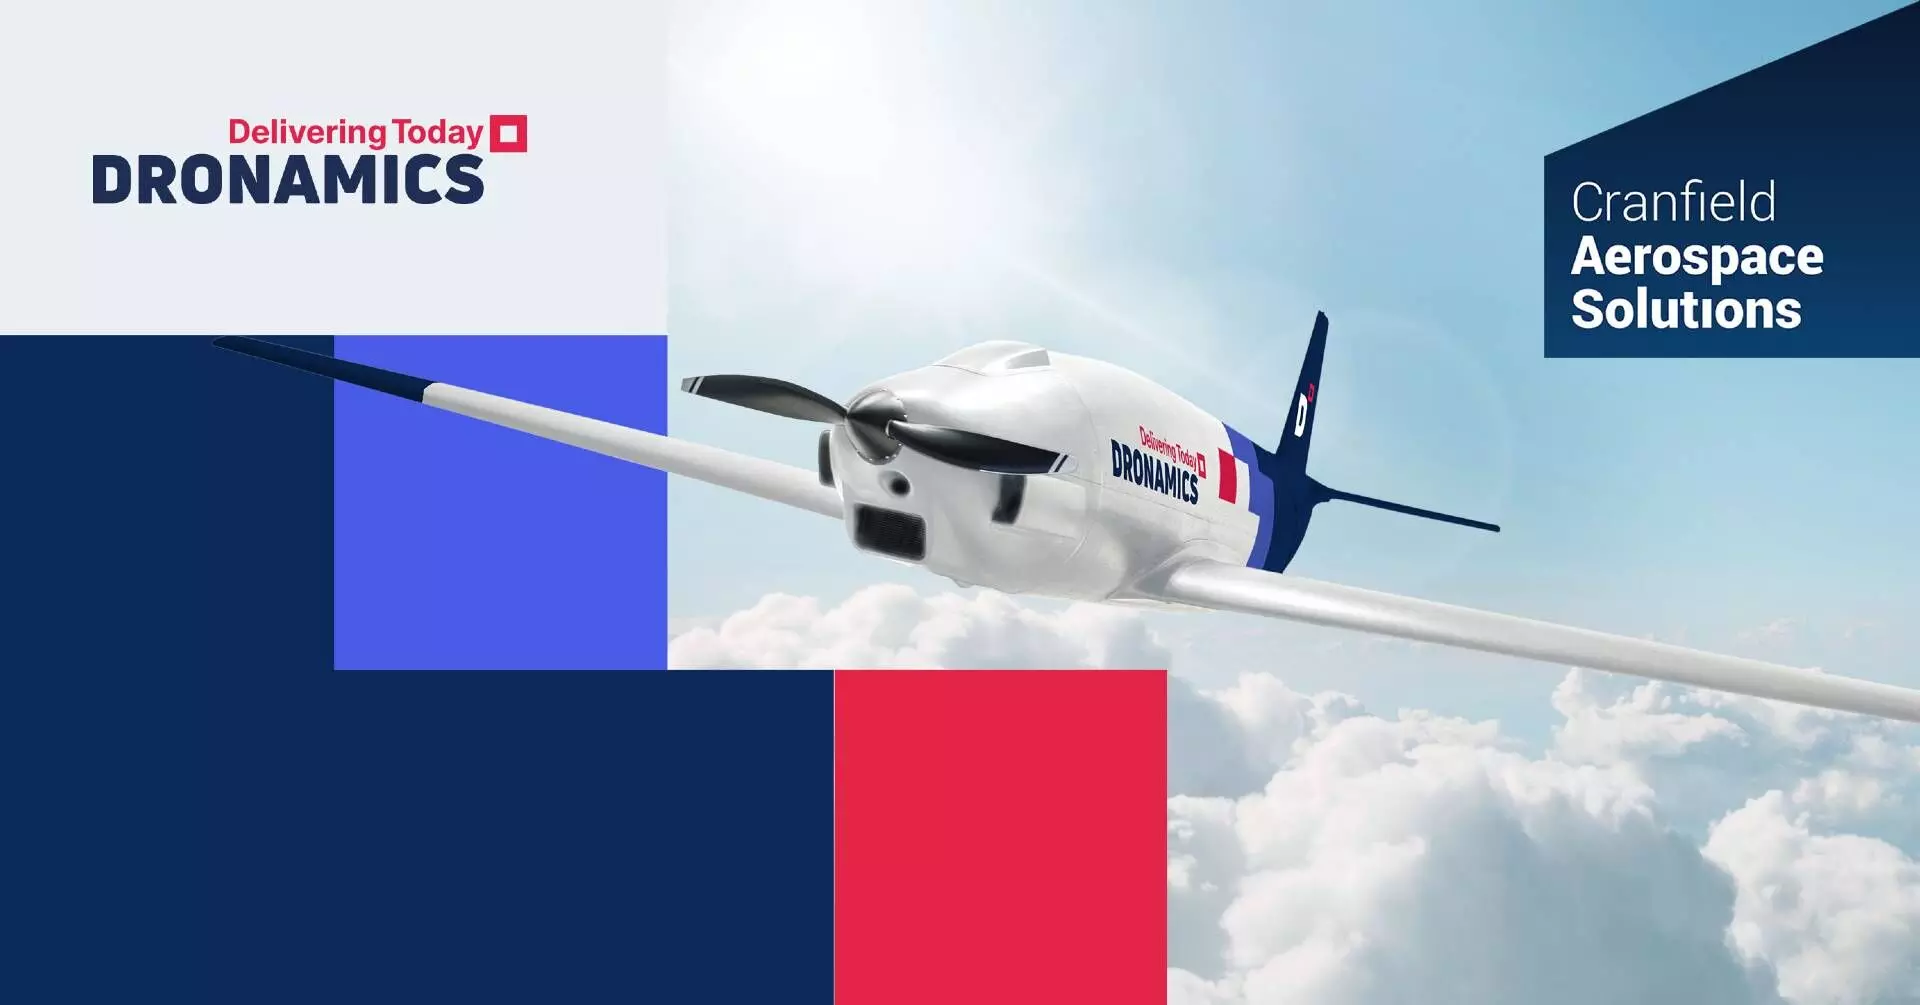 Dronamics & Cranfield Aerospace Solutions to develop hydrogen-fuel technology for cargo drones